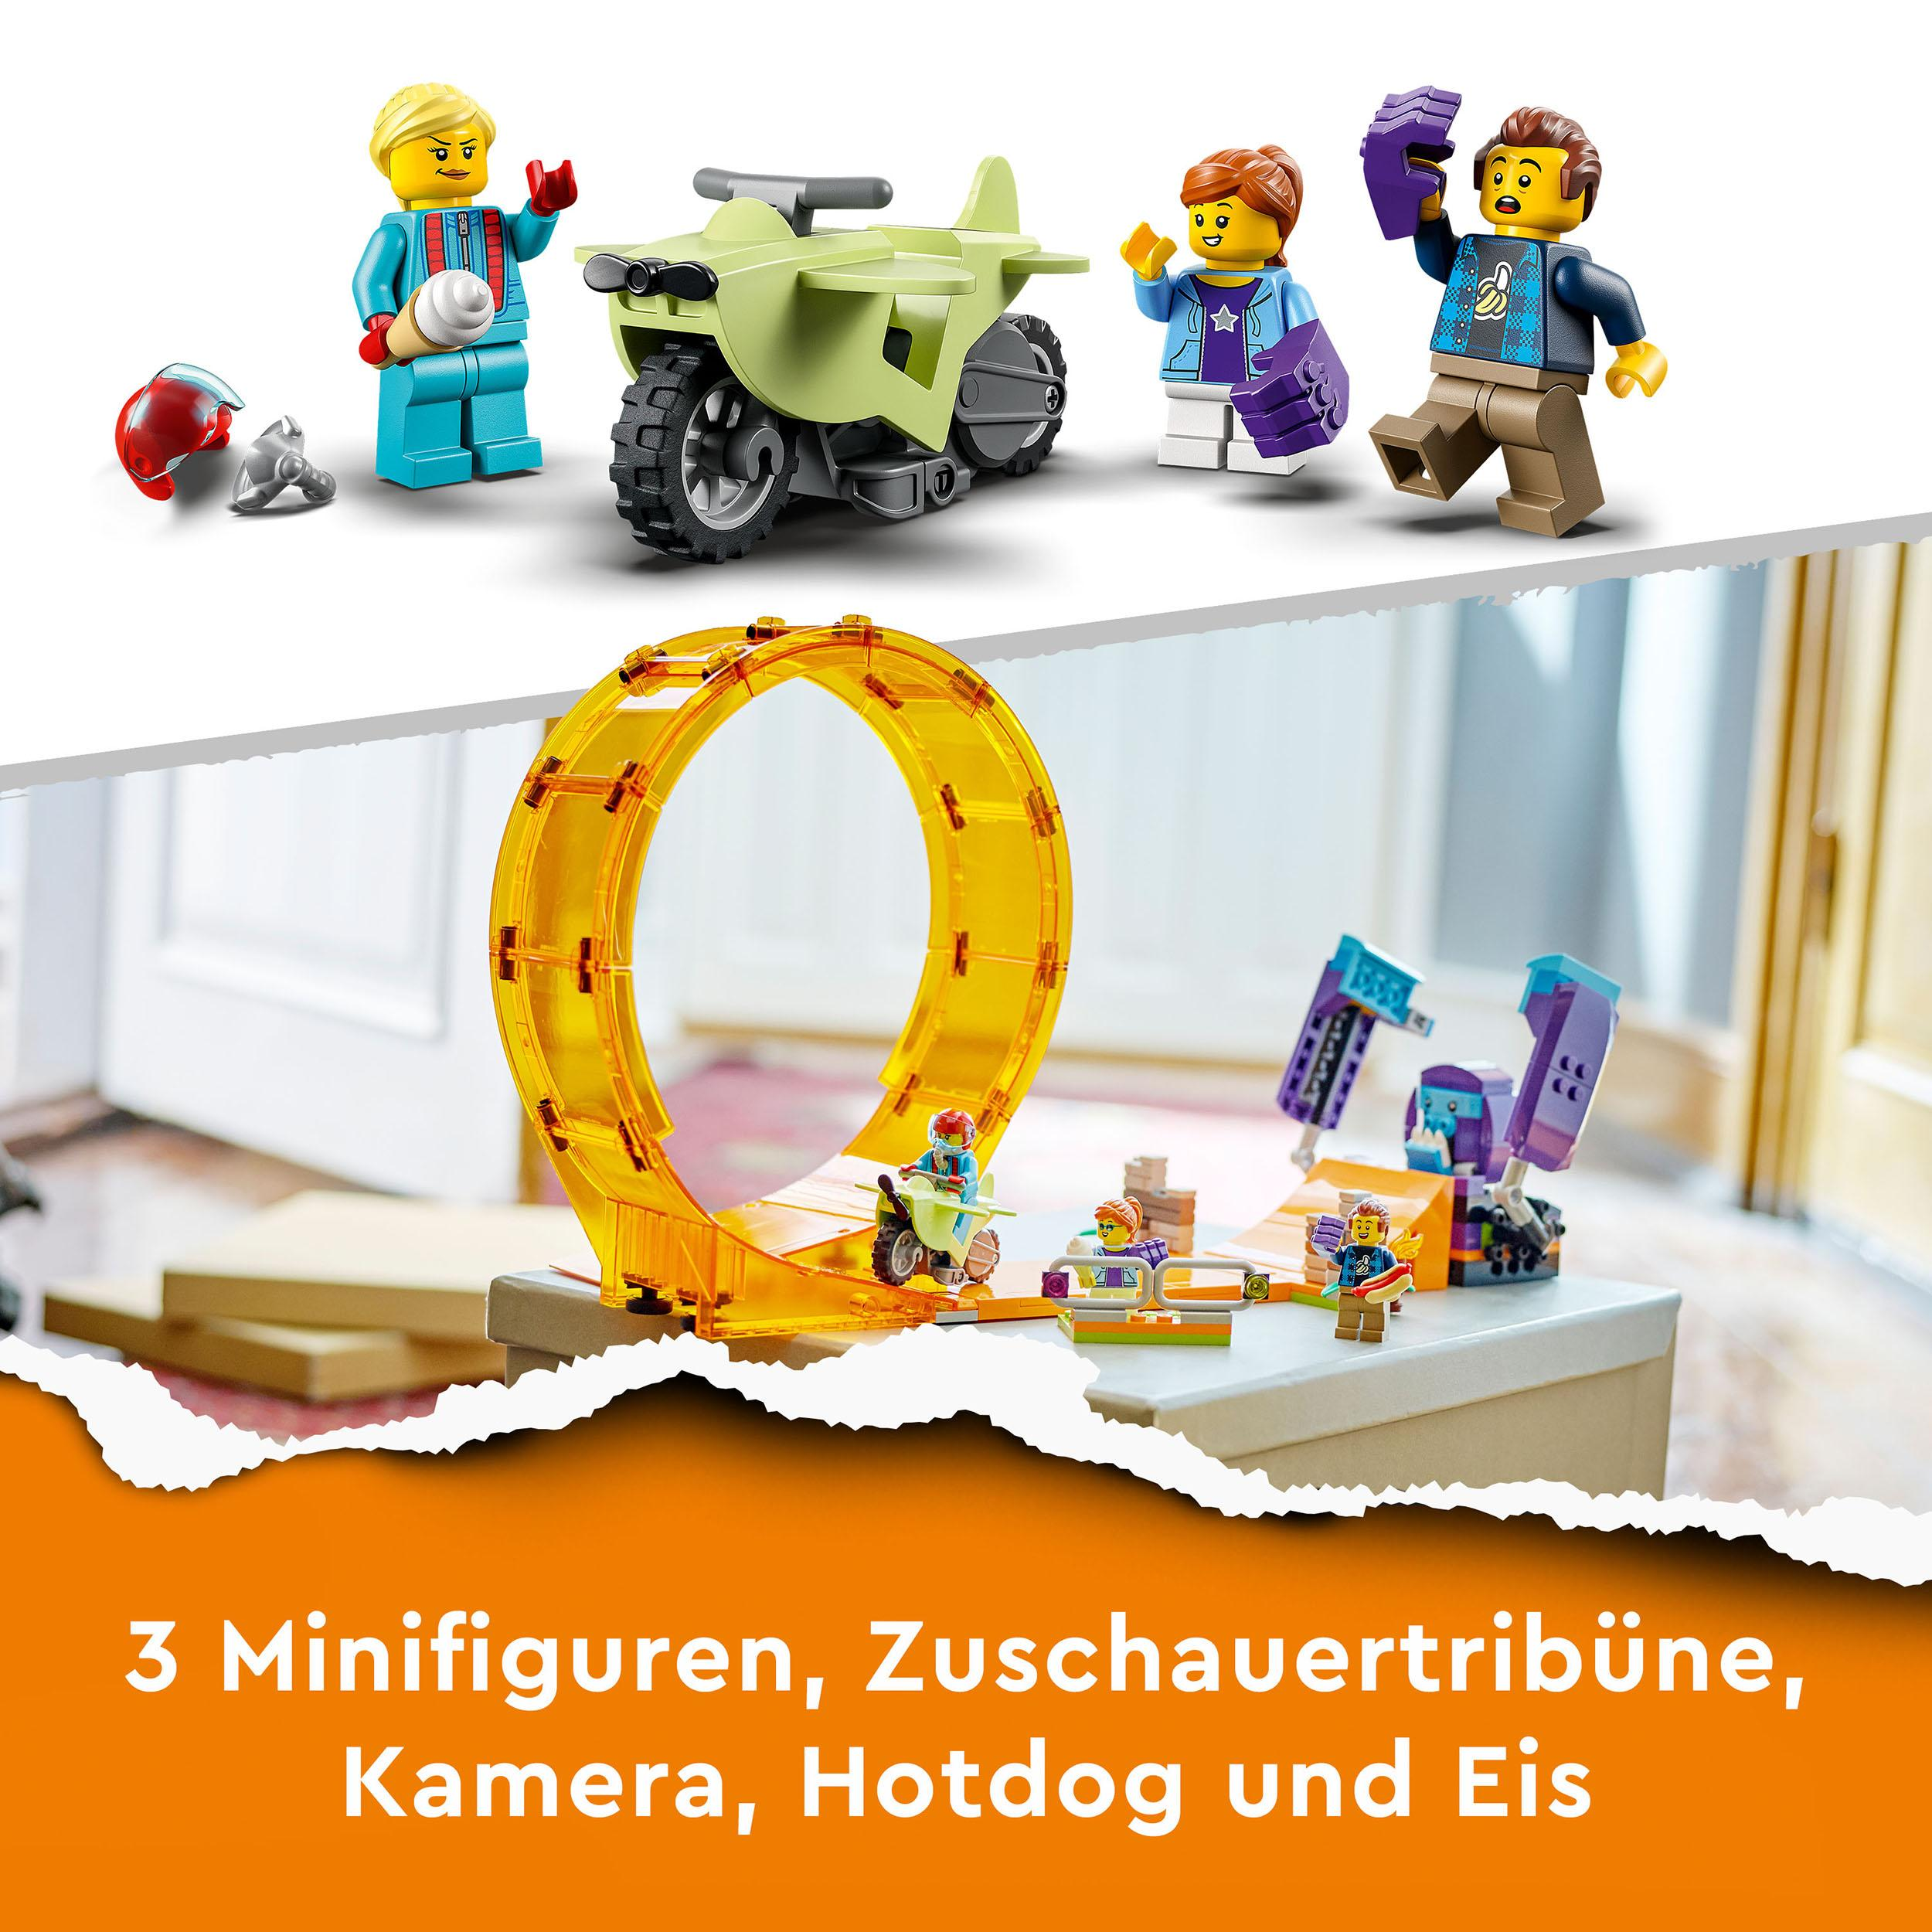 LEGO City Bausatz, Mehrfarbig Schimpansen-Stuntlooping 60338 Stuntz